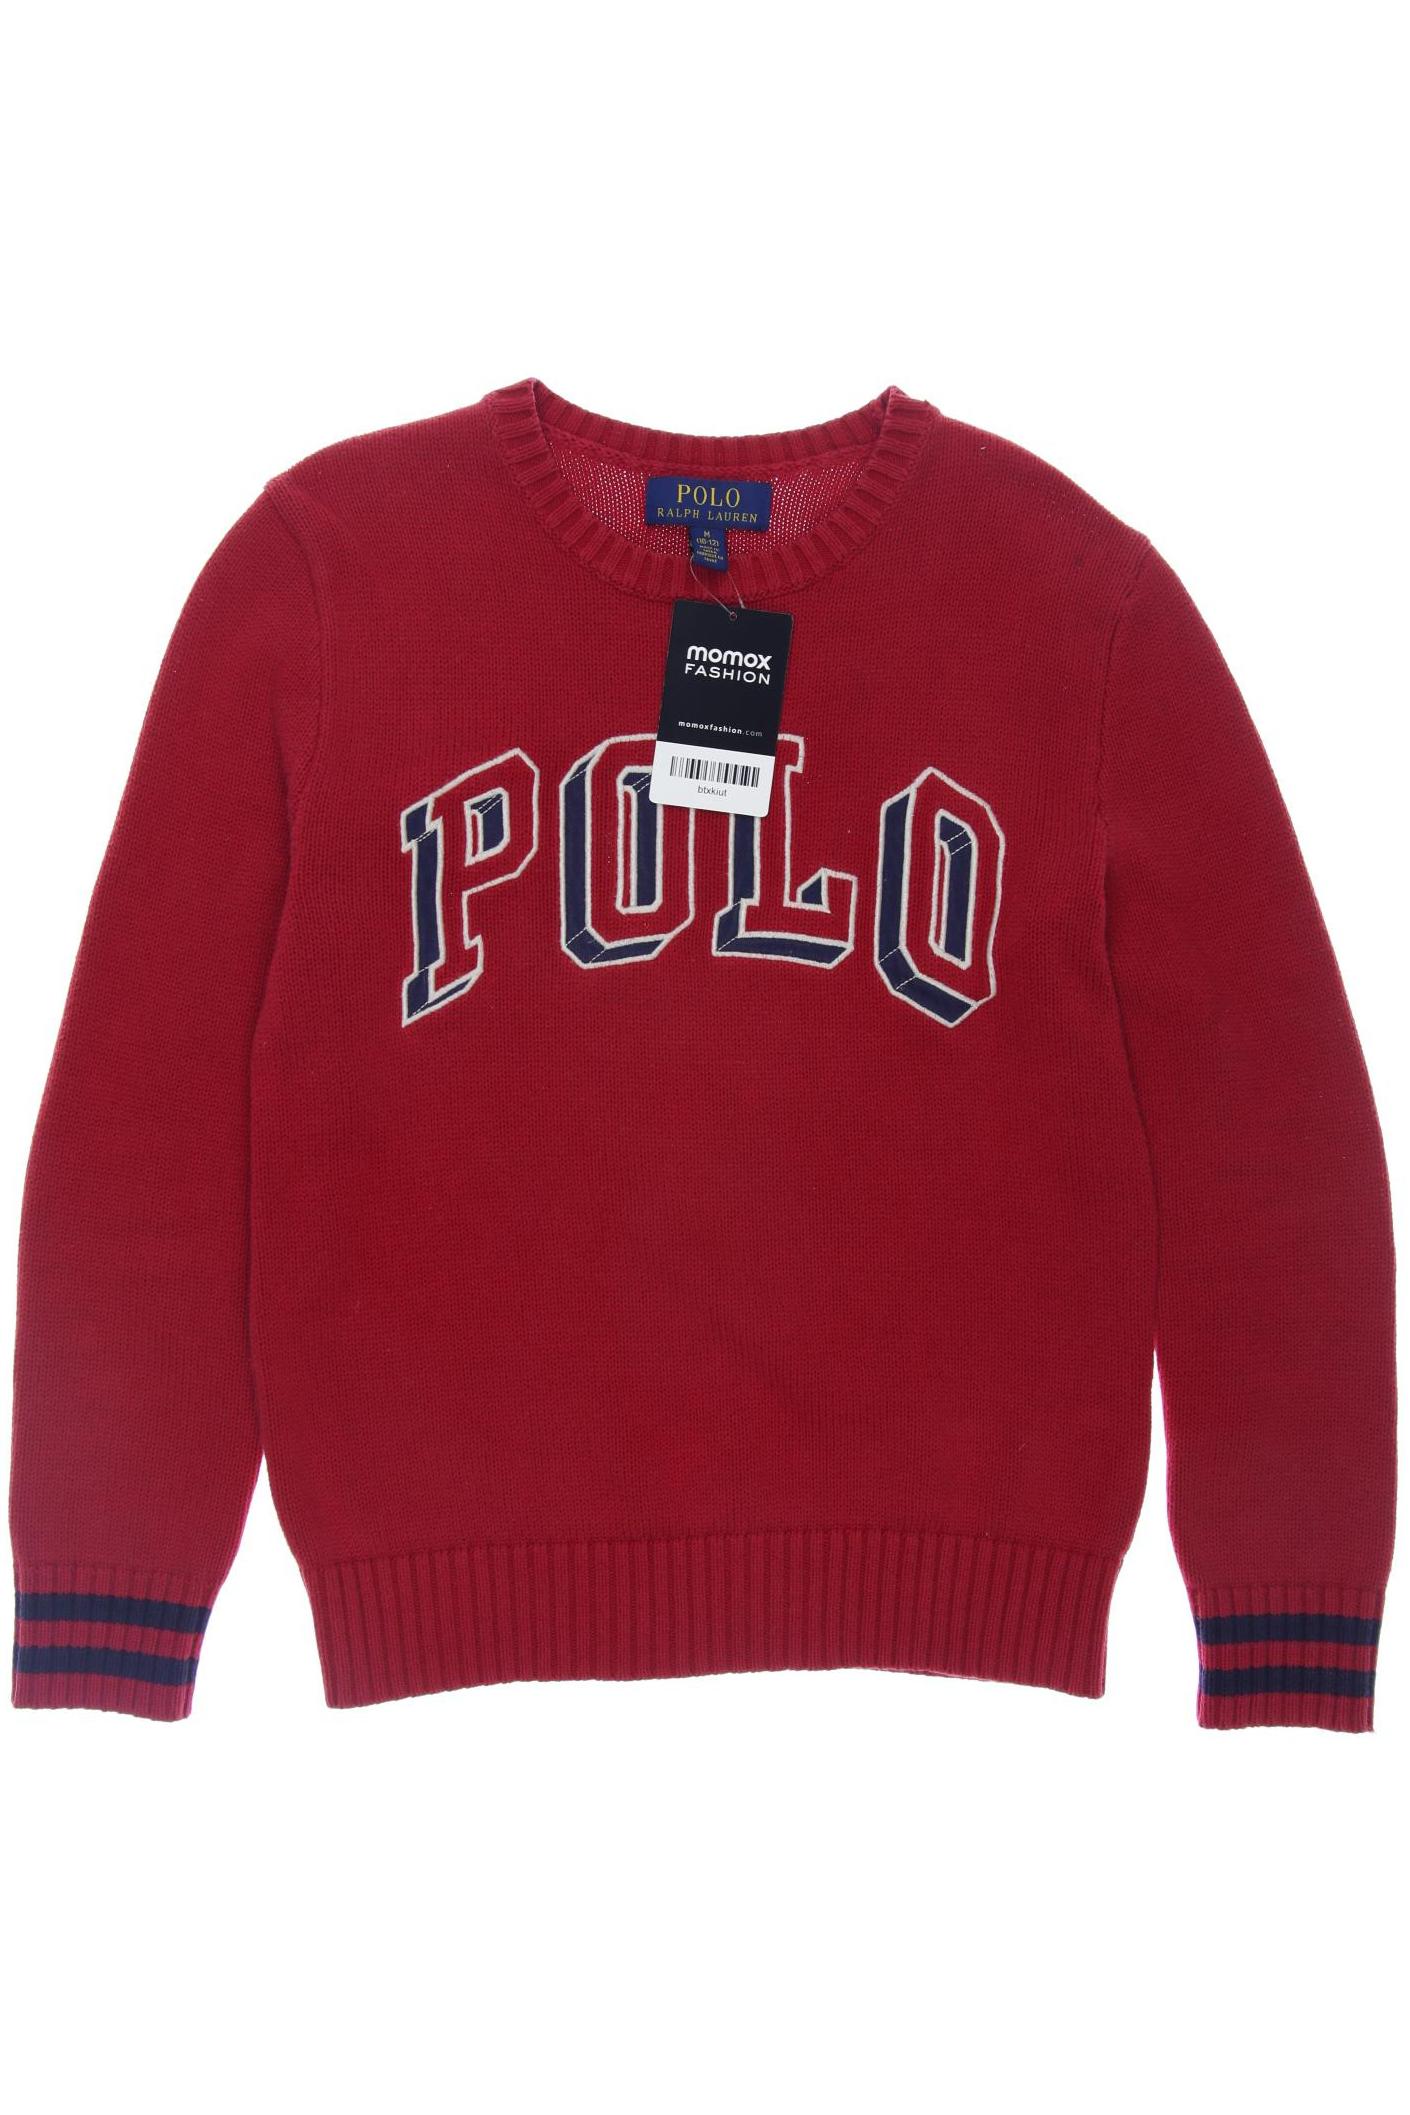 Polo Ralph Lauren Jungen Pullover, rot von Polo Ralph Lauren